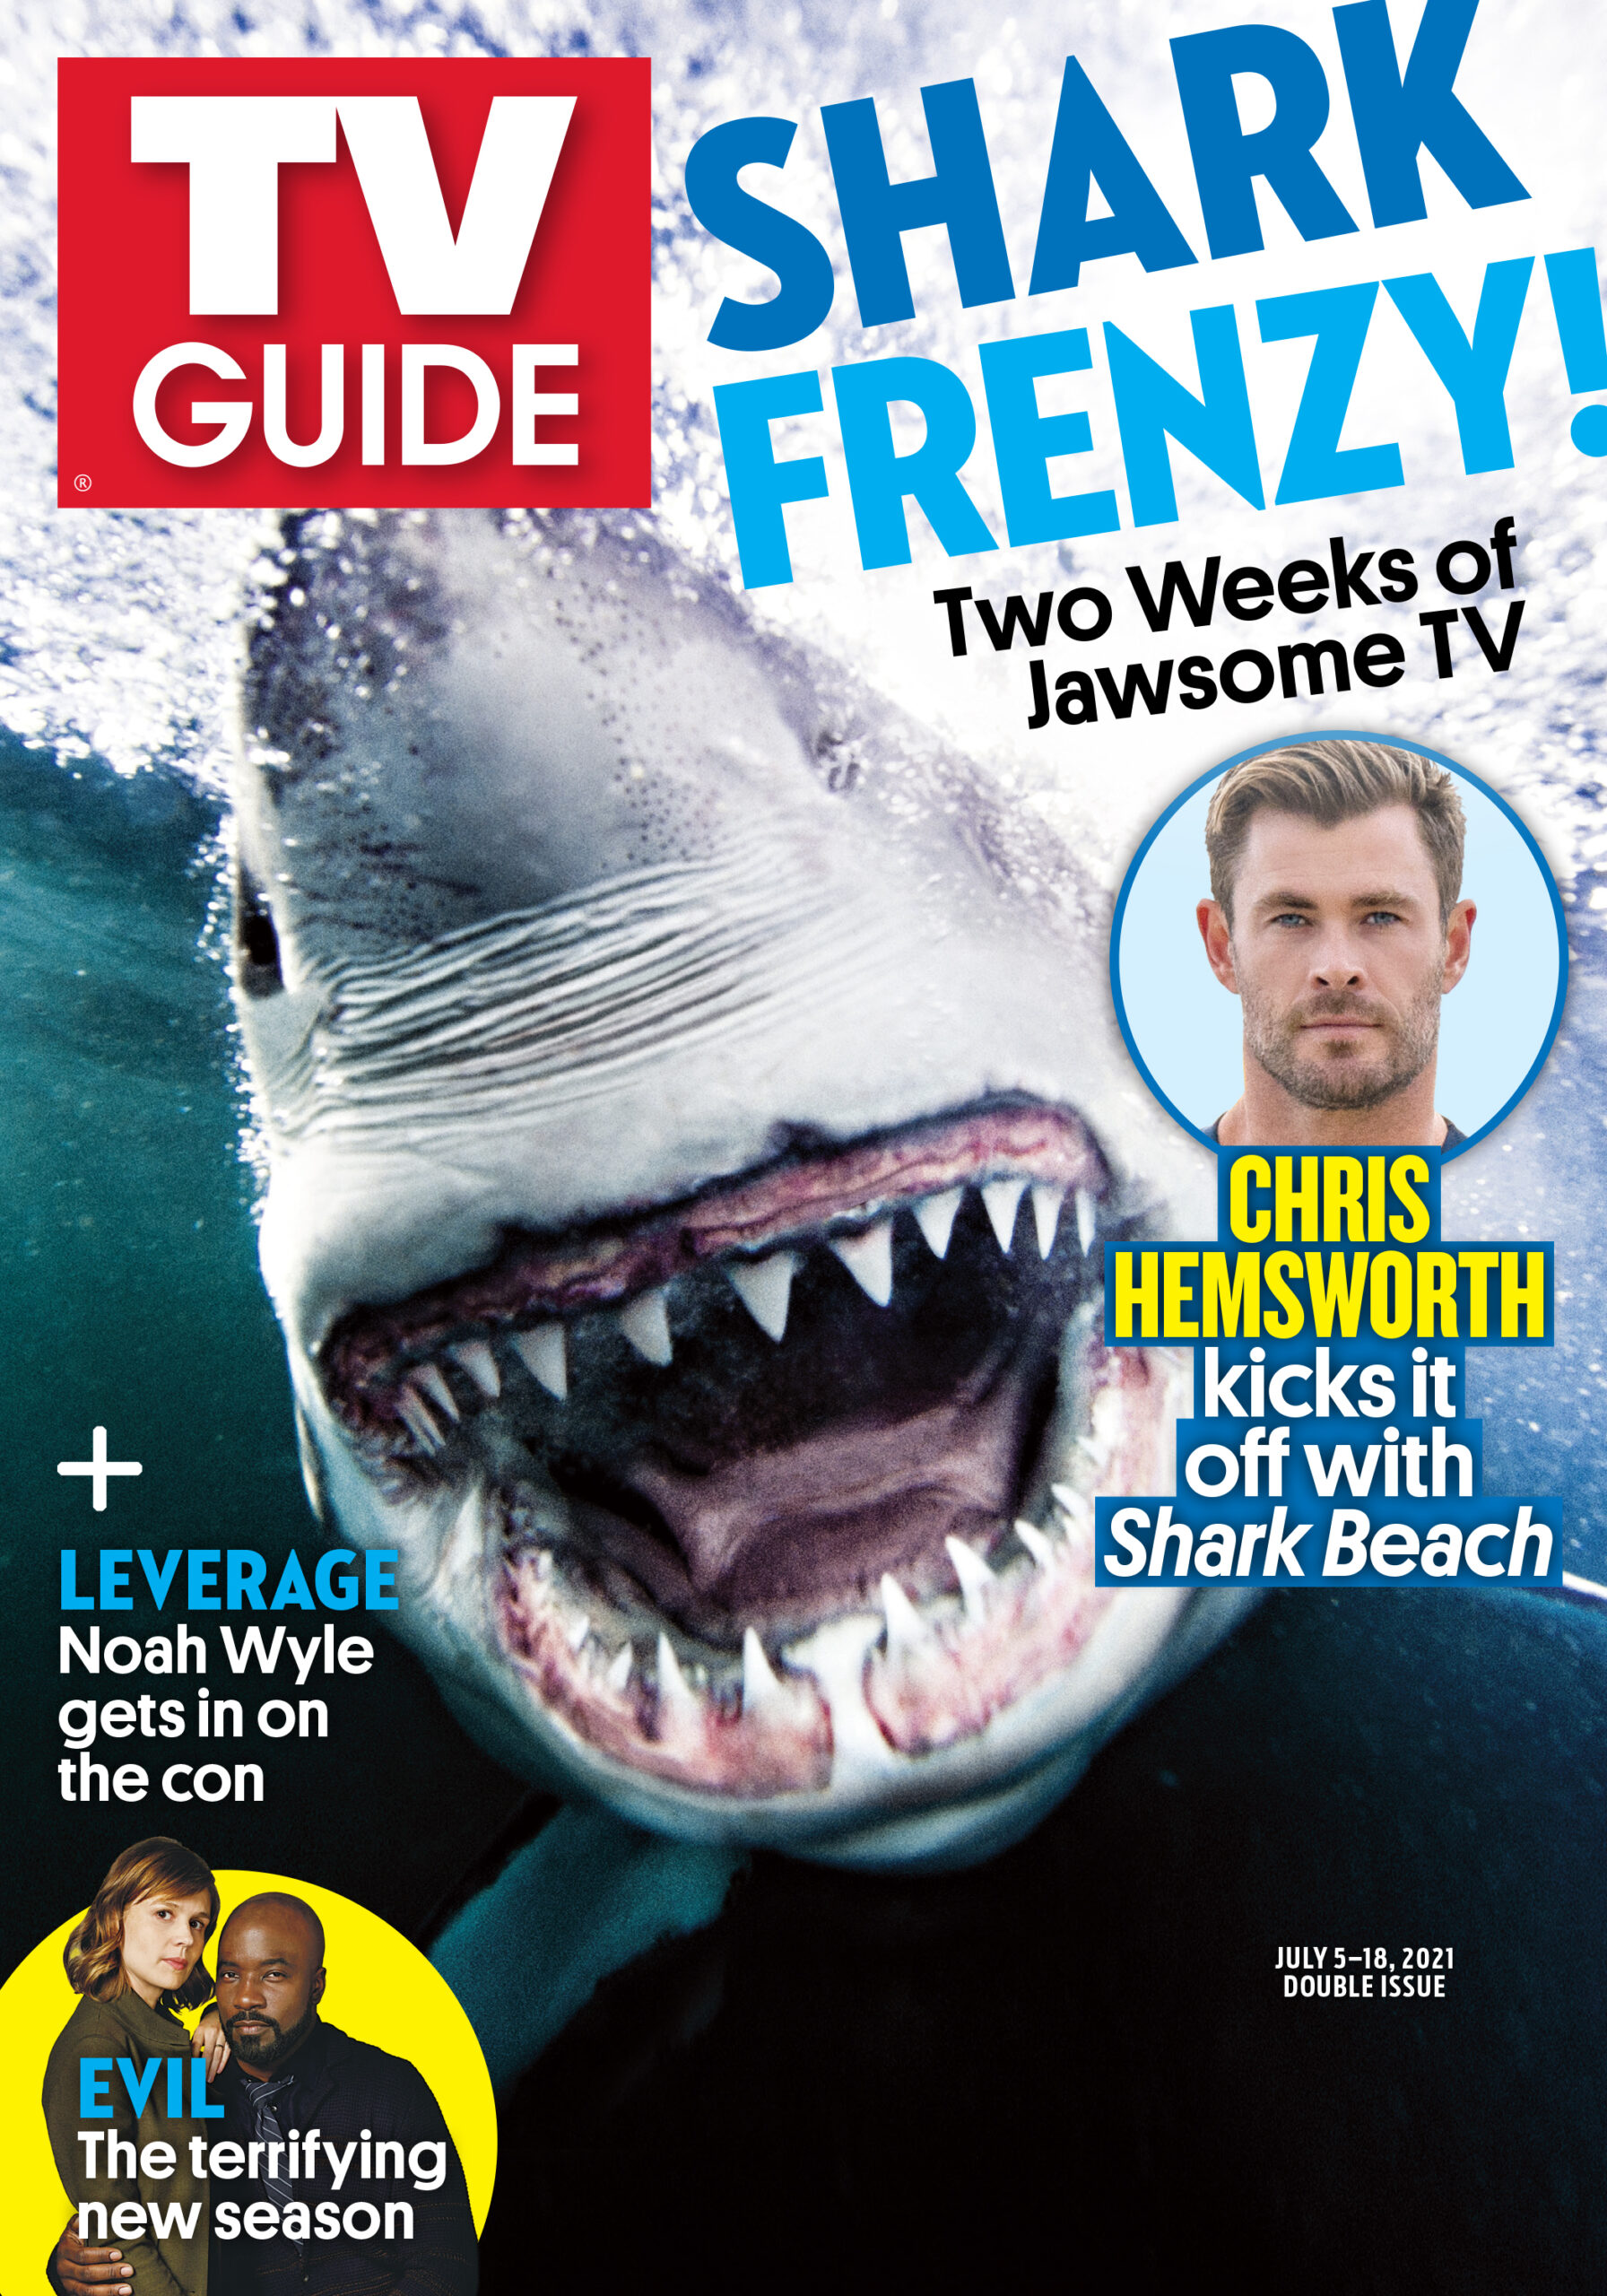 TV Guide - Cover Shark Frenzy - July 1, 2021